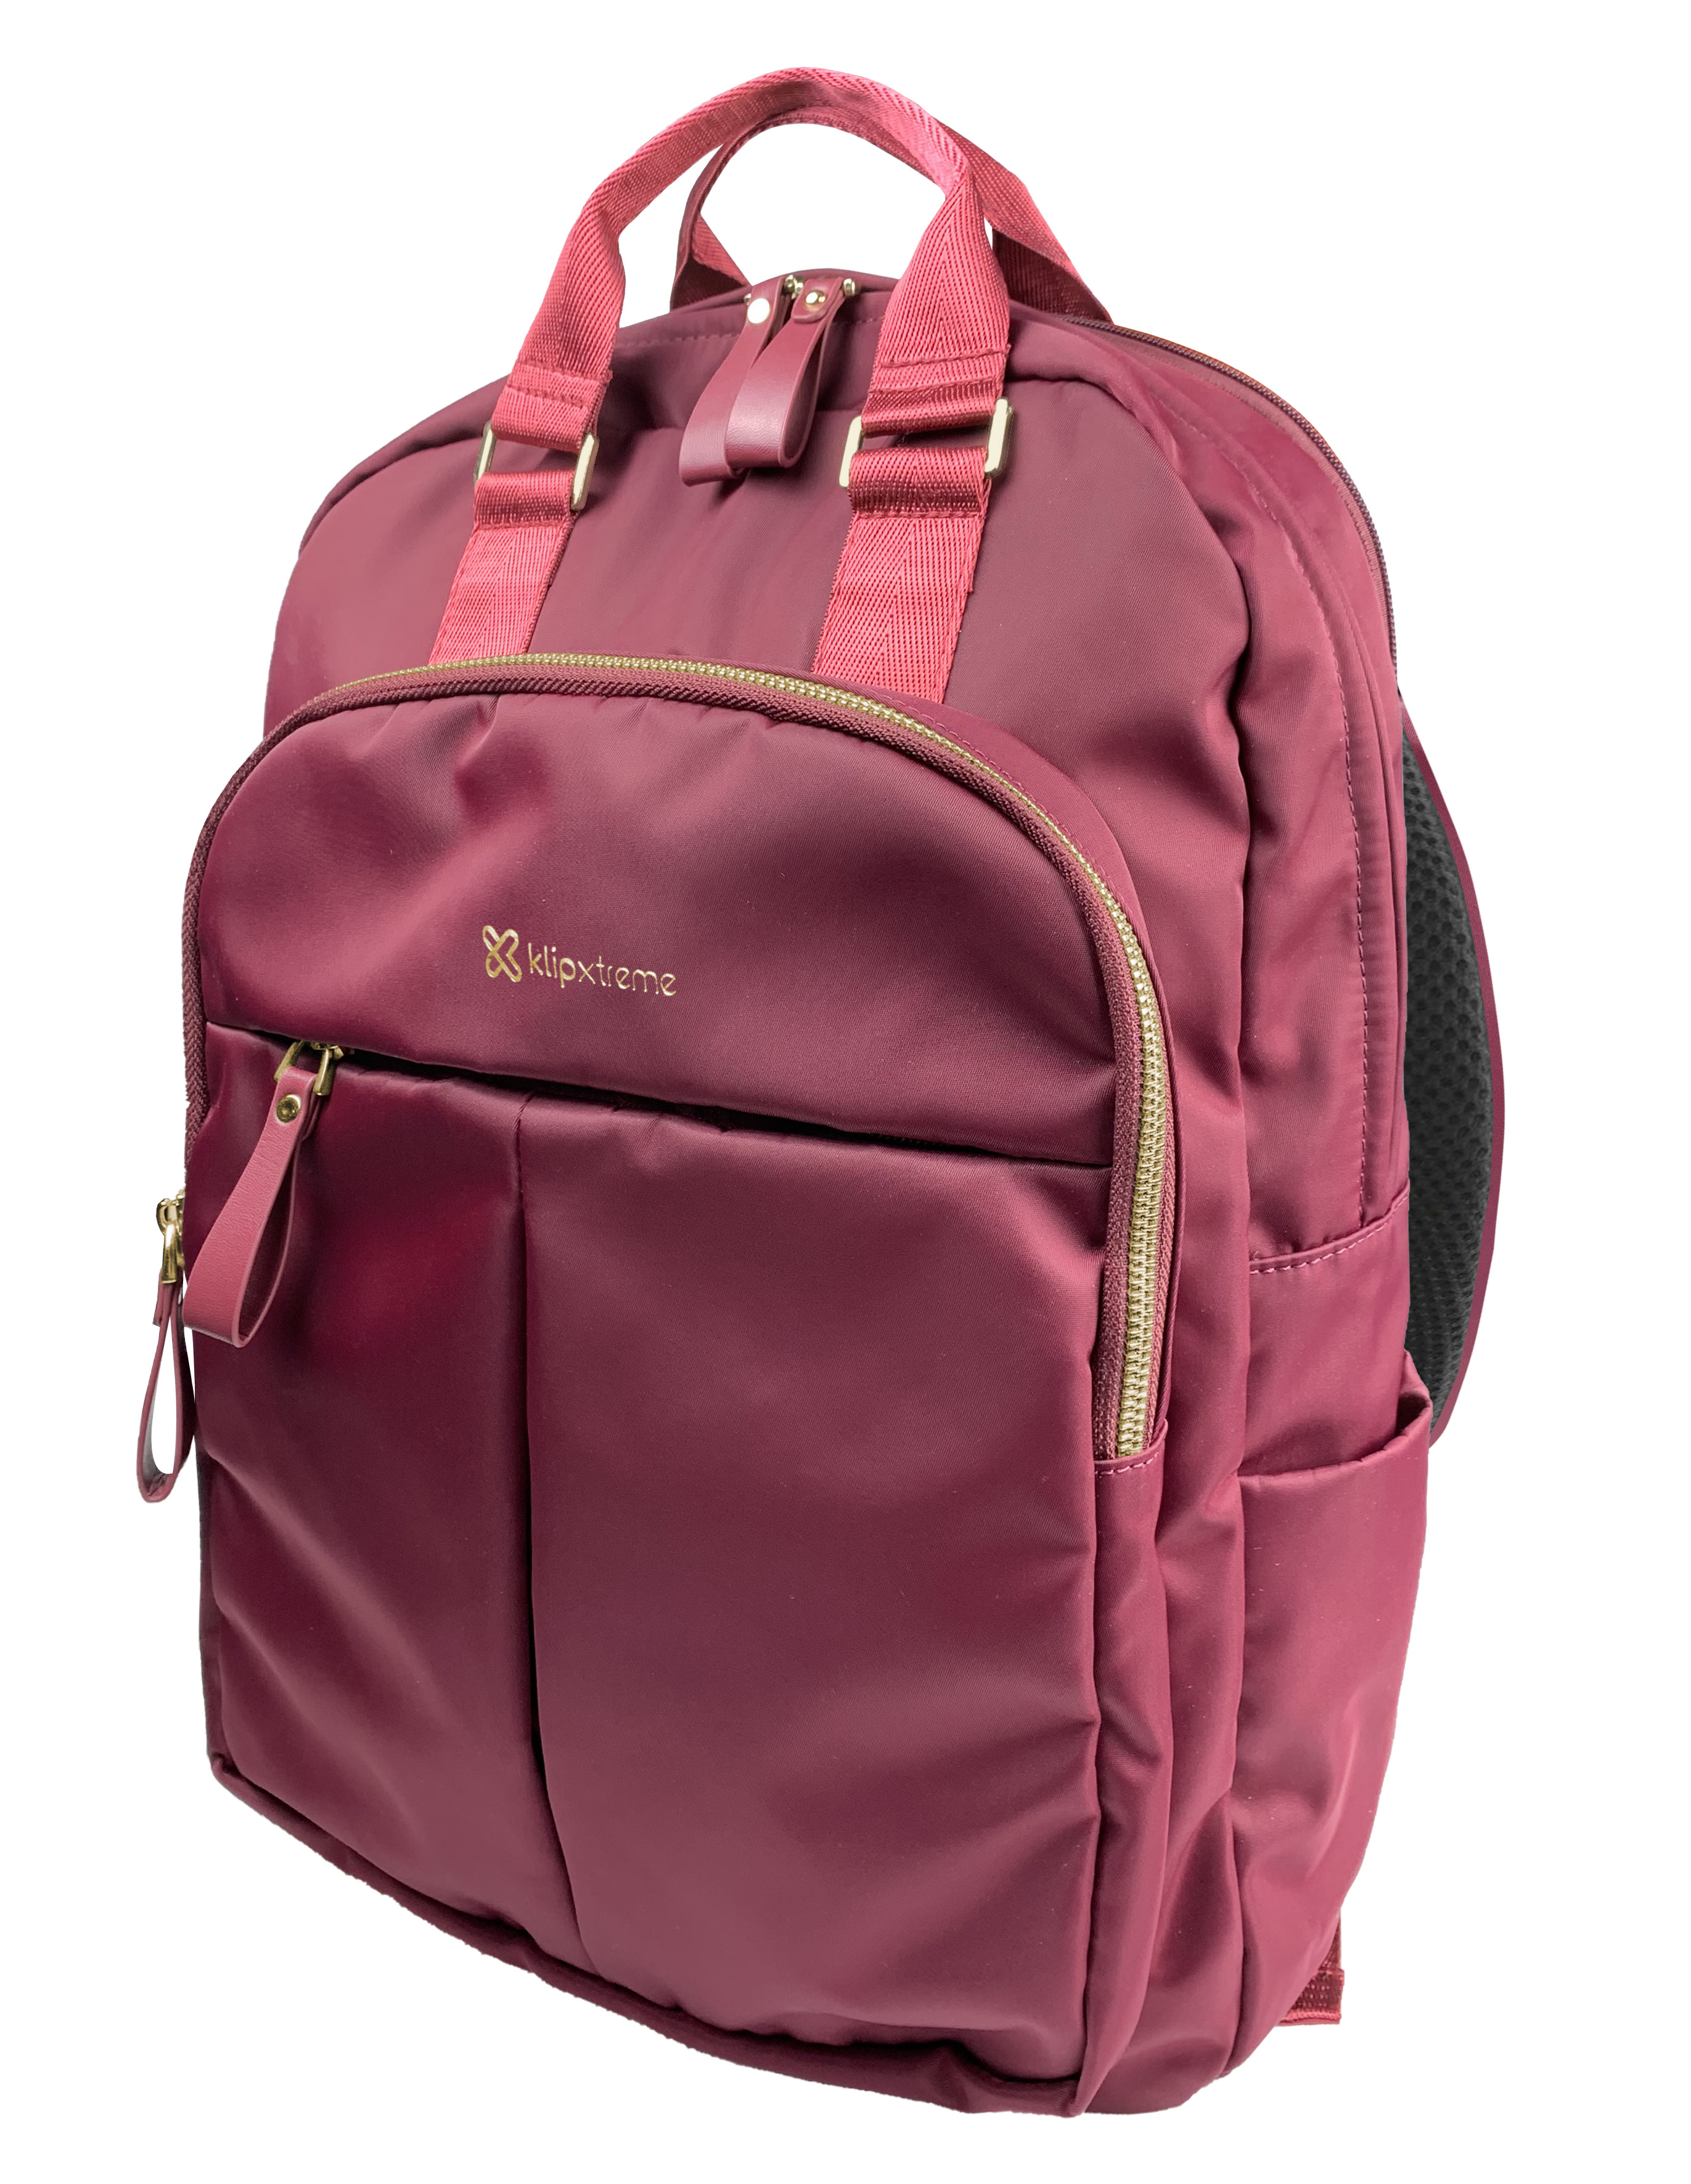 Emblem - laptop backpack - KNB-582